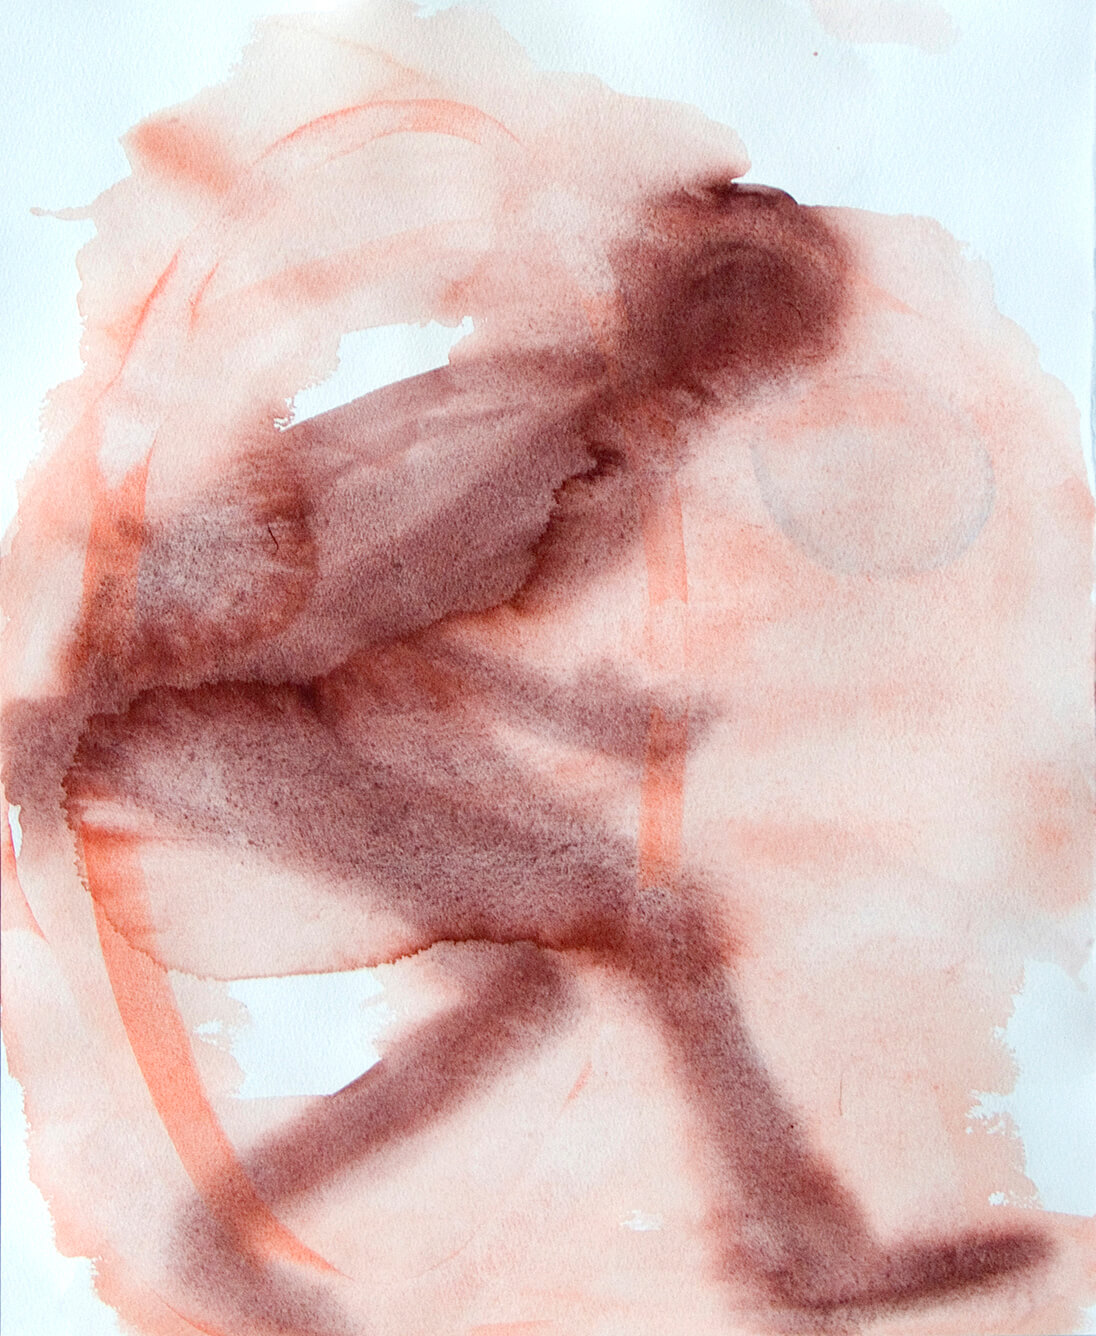 untitled (hoop man), 42 x 33 cm, watercolour, 2008